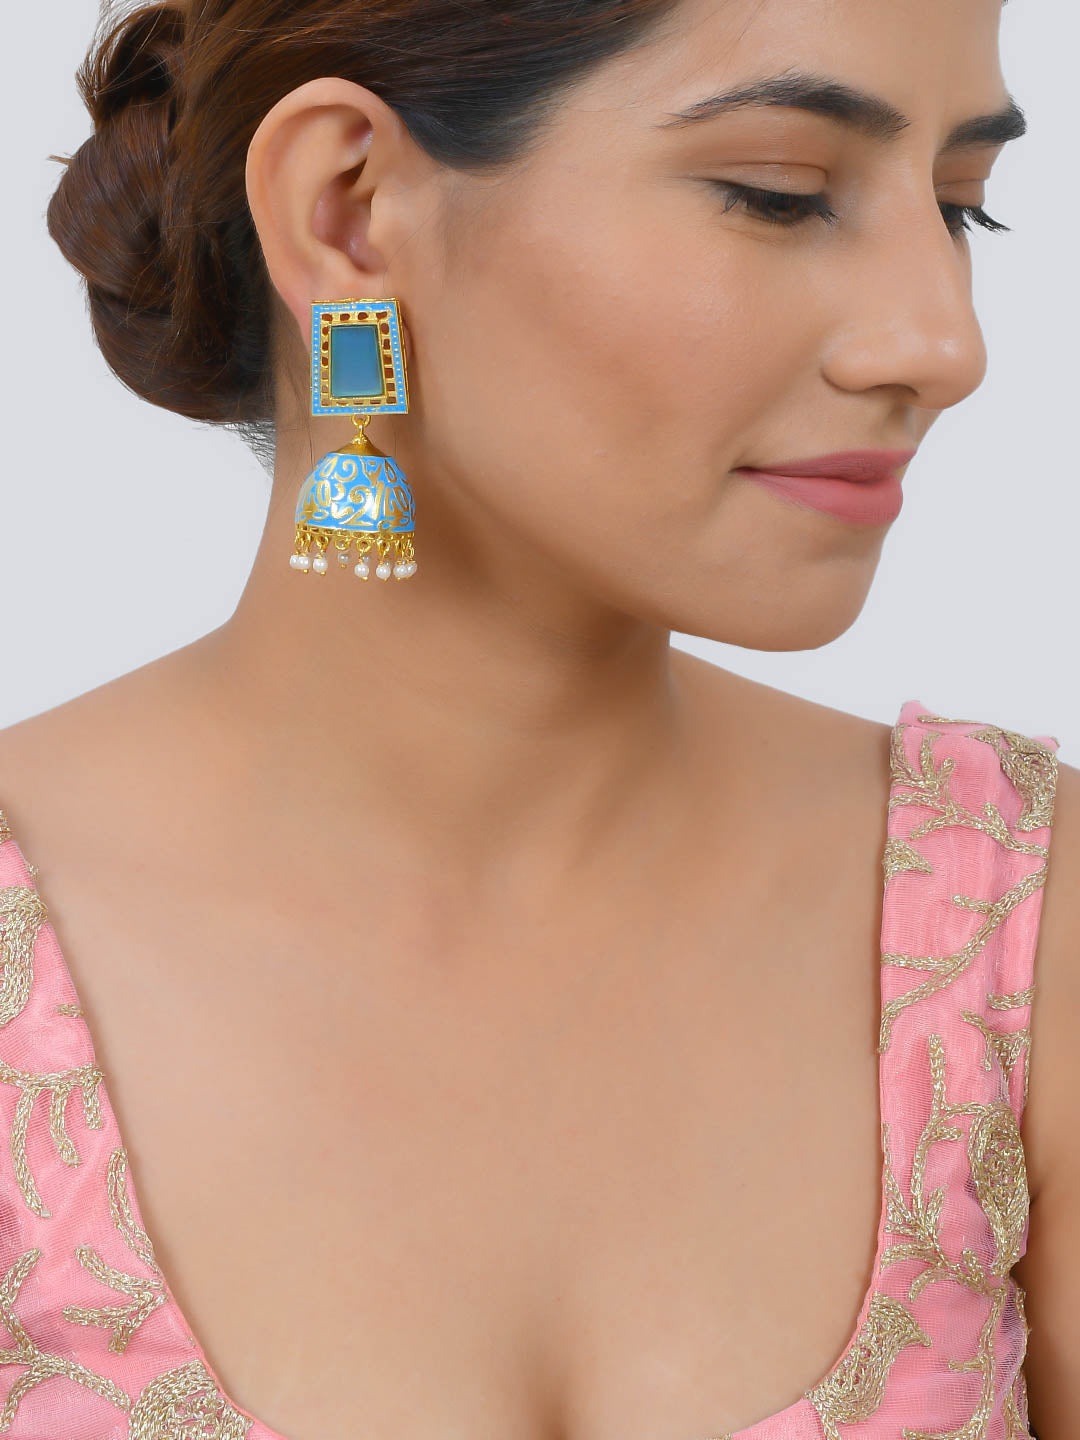 Indian Gold Plated Minakari Pearl Sky Blue Jhumka Earring For Women Girls